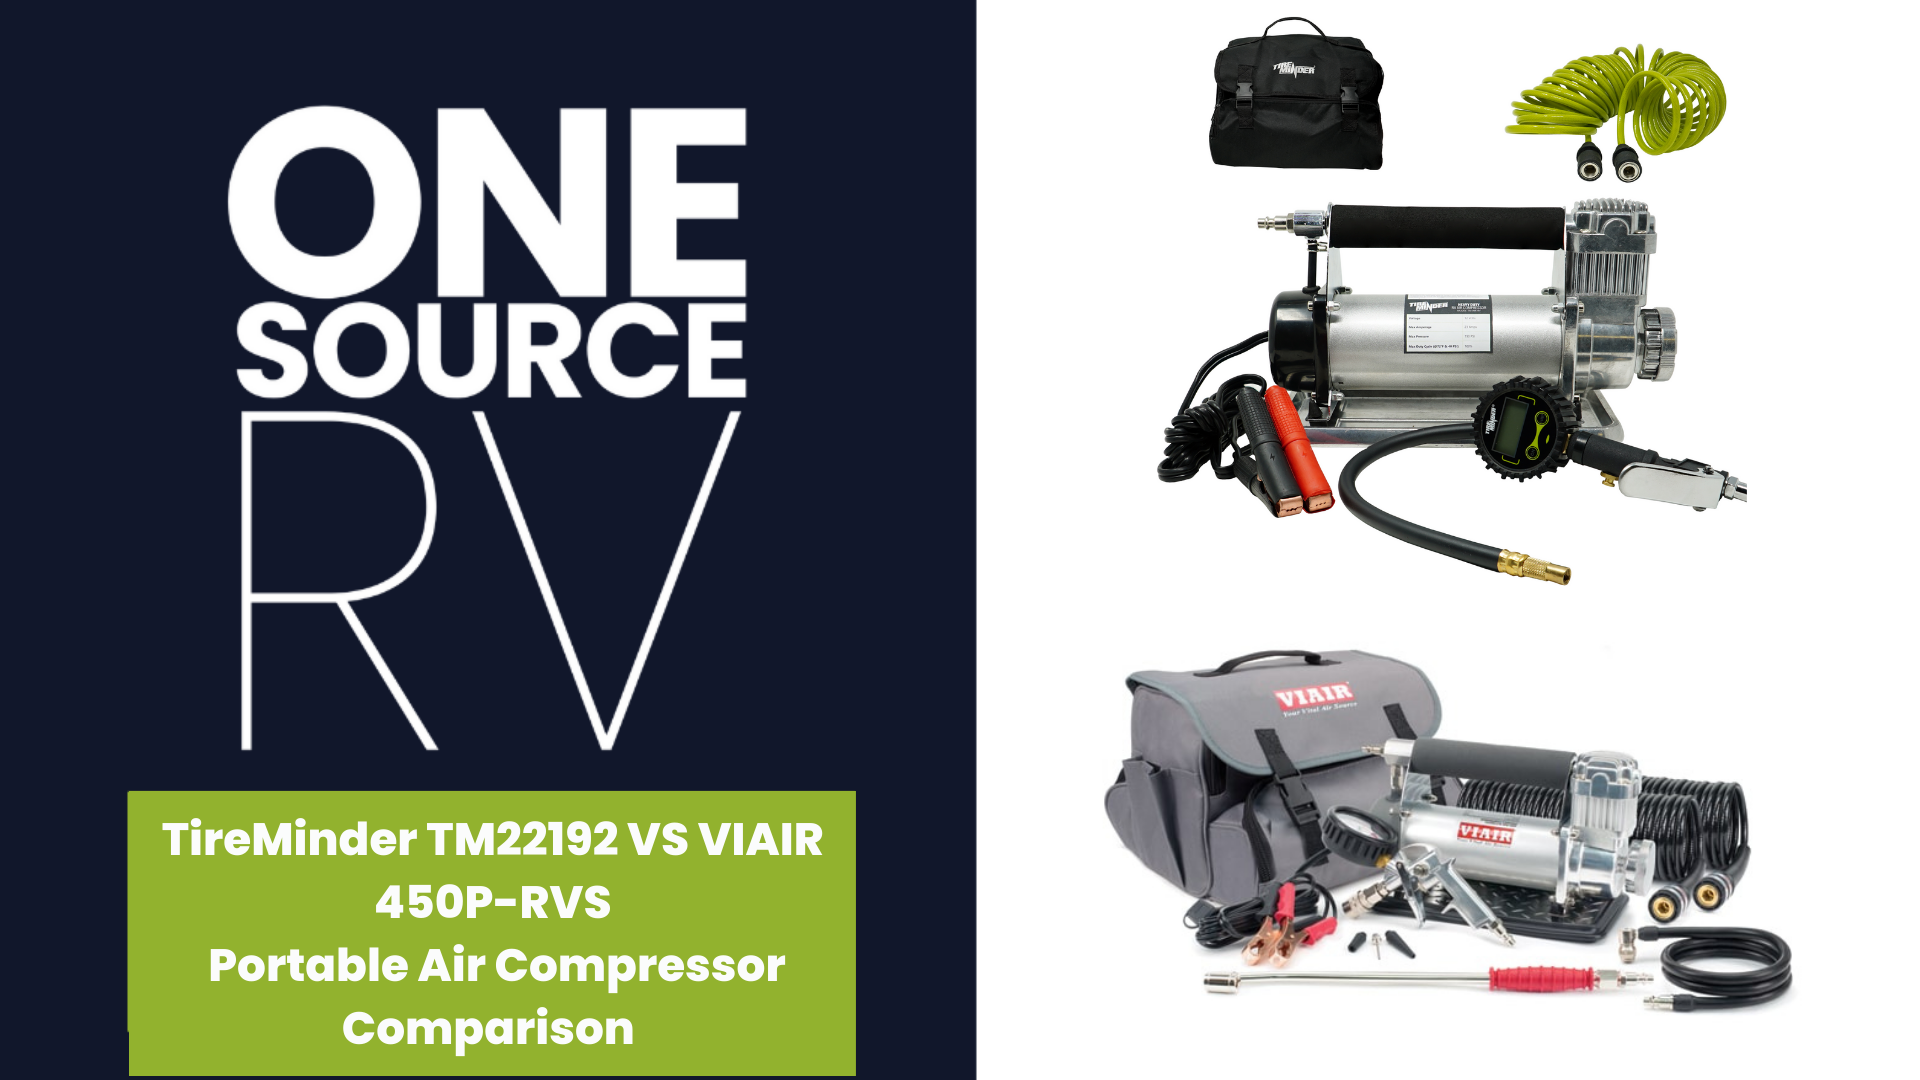 TireMinder TM22192 VS VIAIR 450P-RVS Portable Air Compressor Comparison